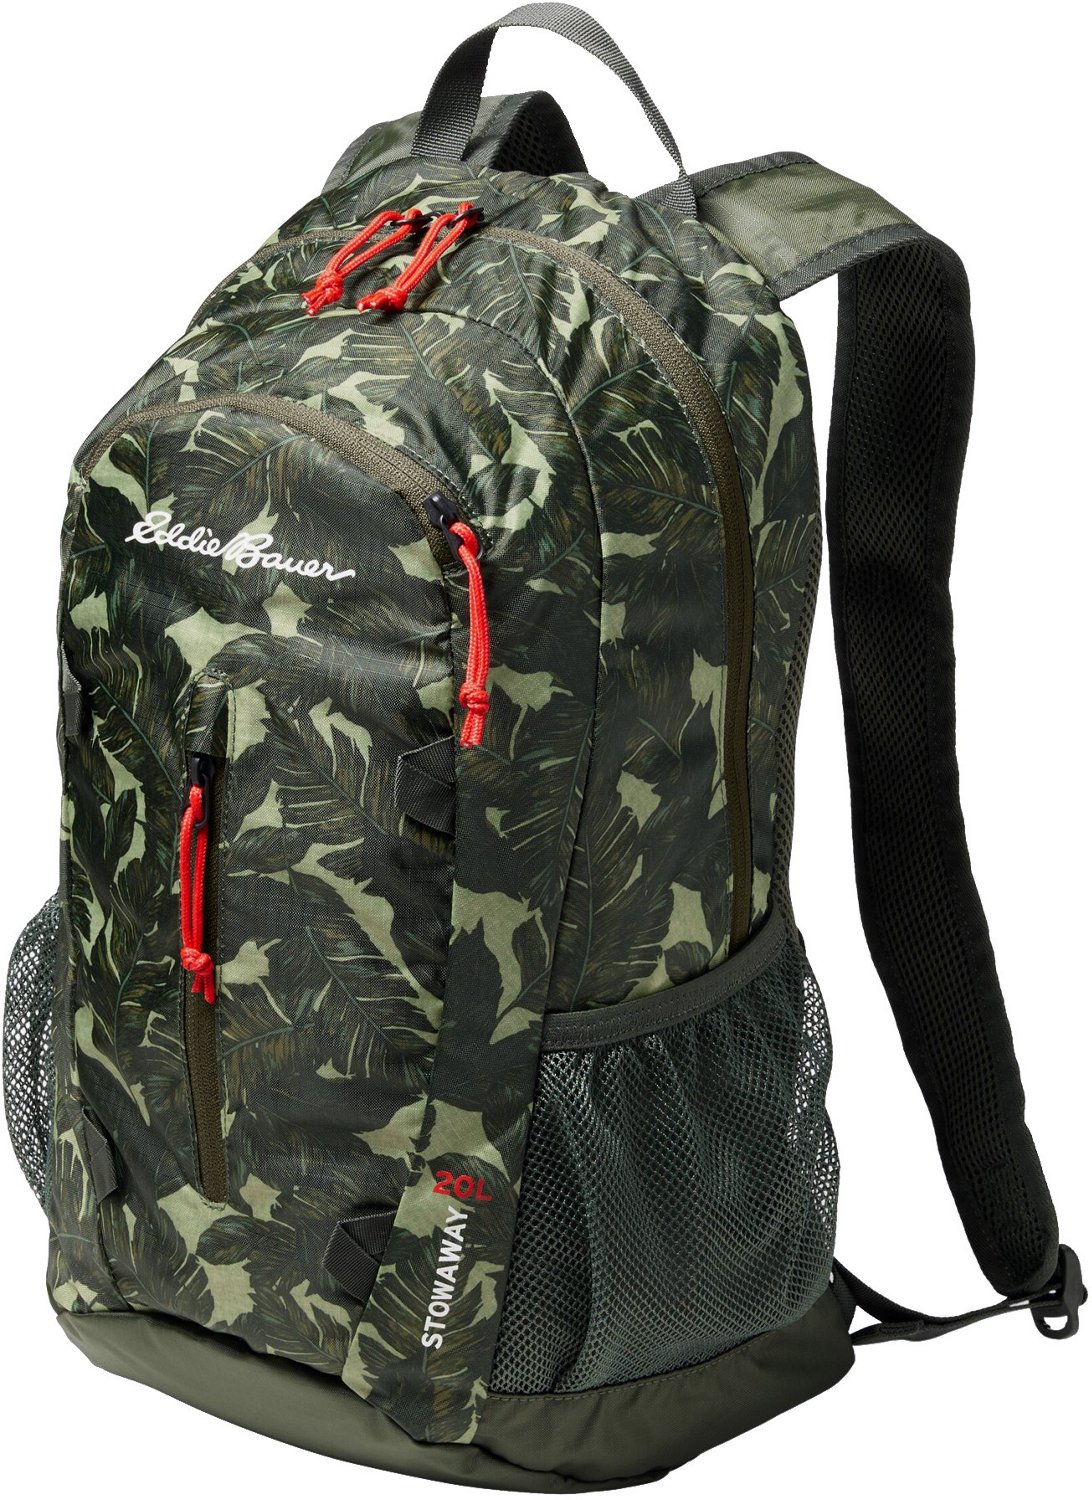 Eddie Bauer Stowaway Packable 20L Daypack Backpack                                                                               - view number 1 selected